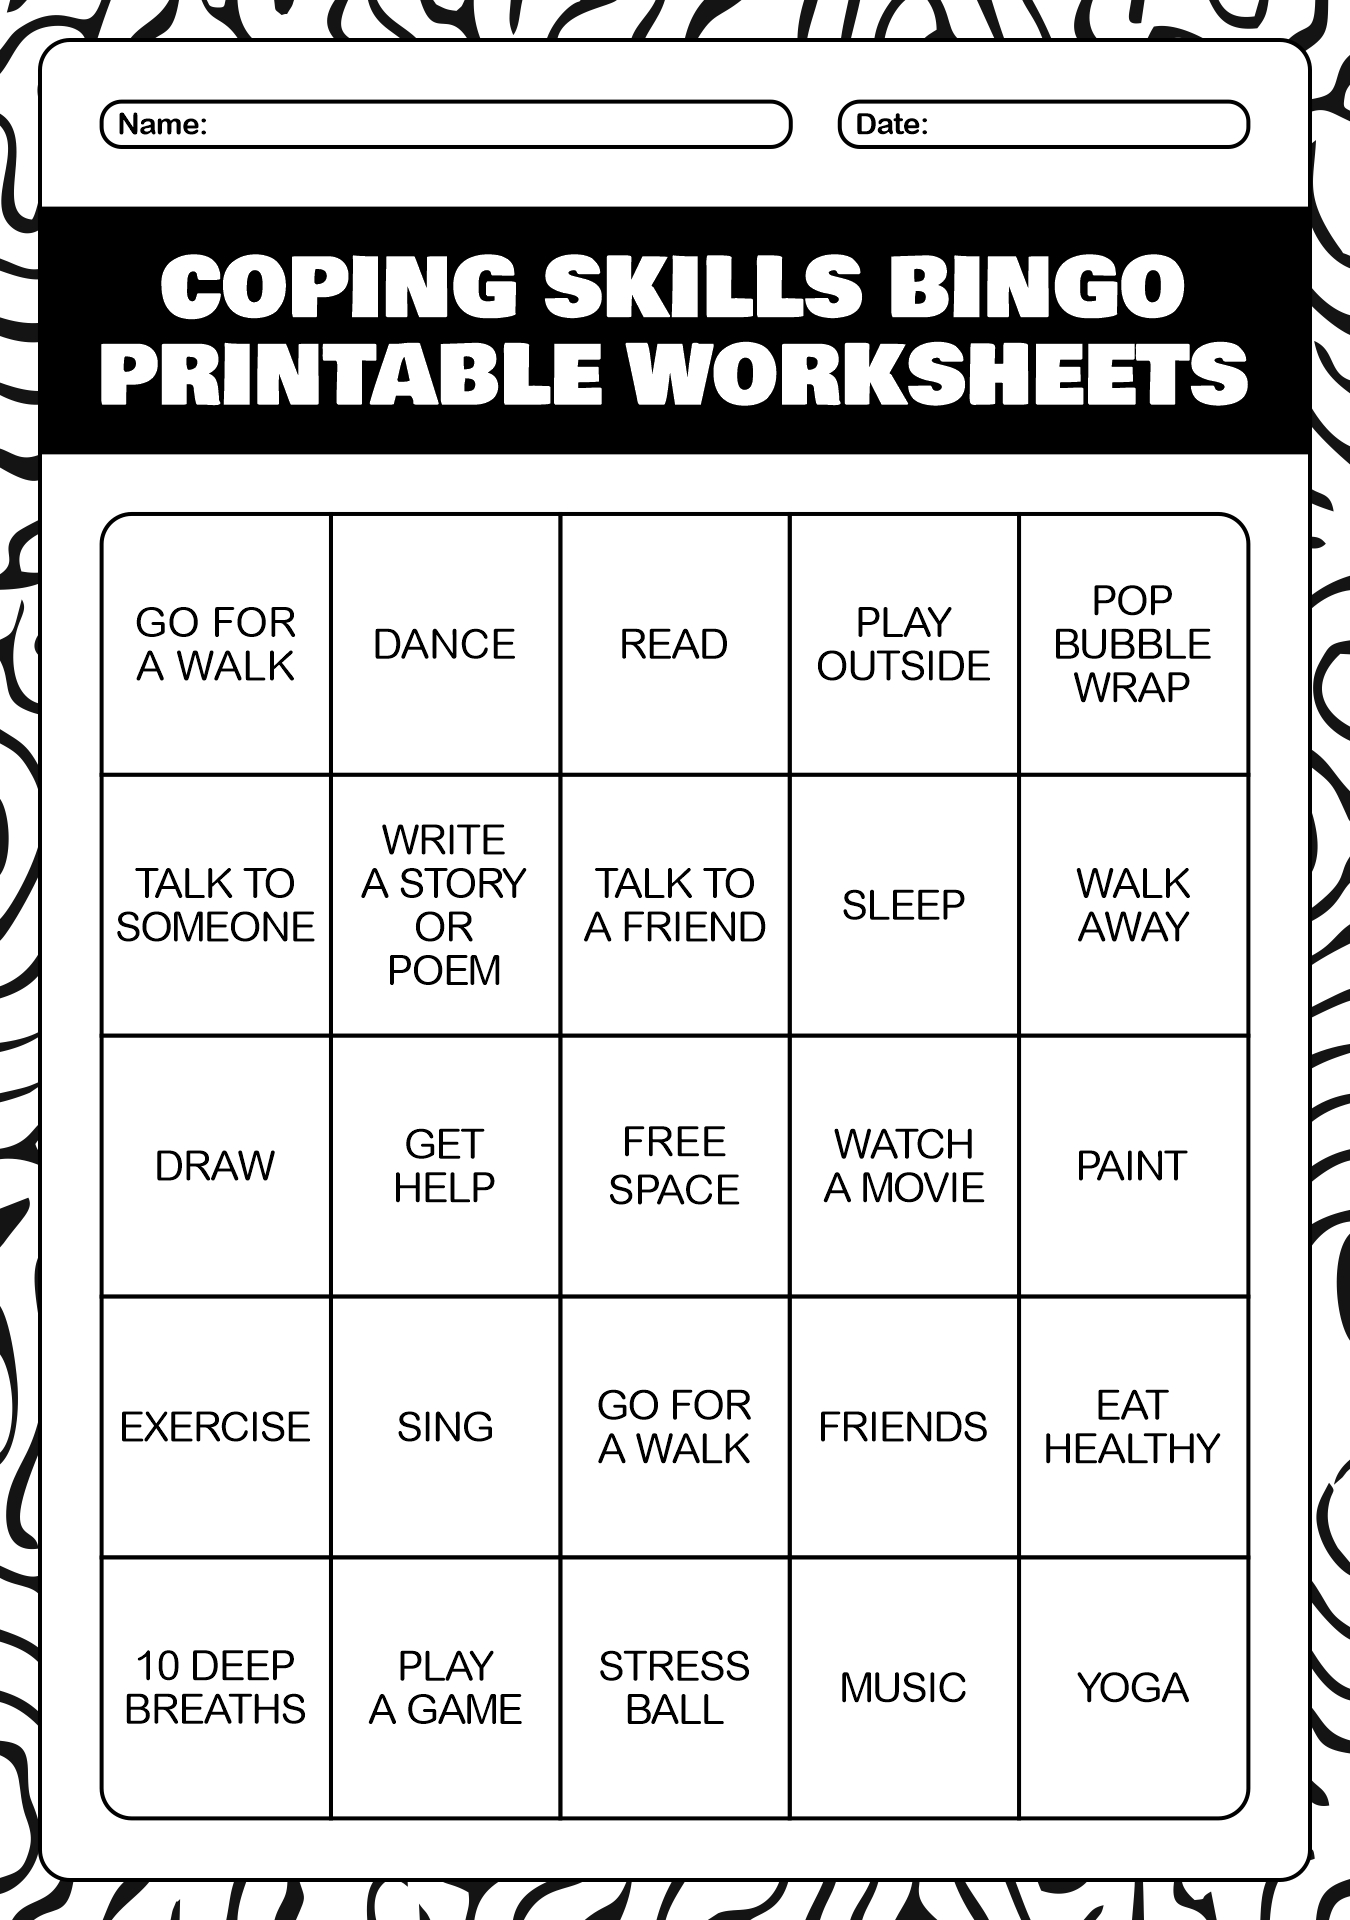 13-best-images-of-coping-skills-worksheets-printable-bingo-cards